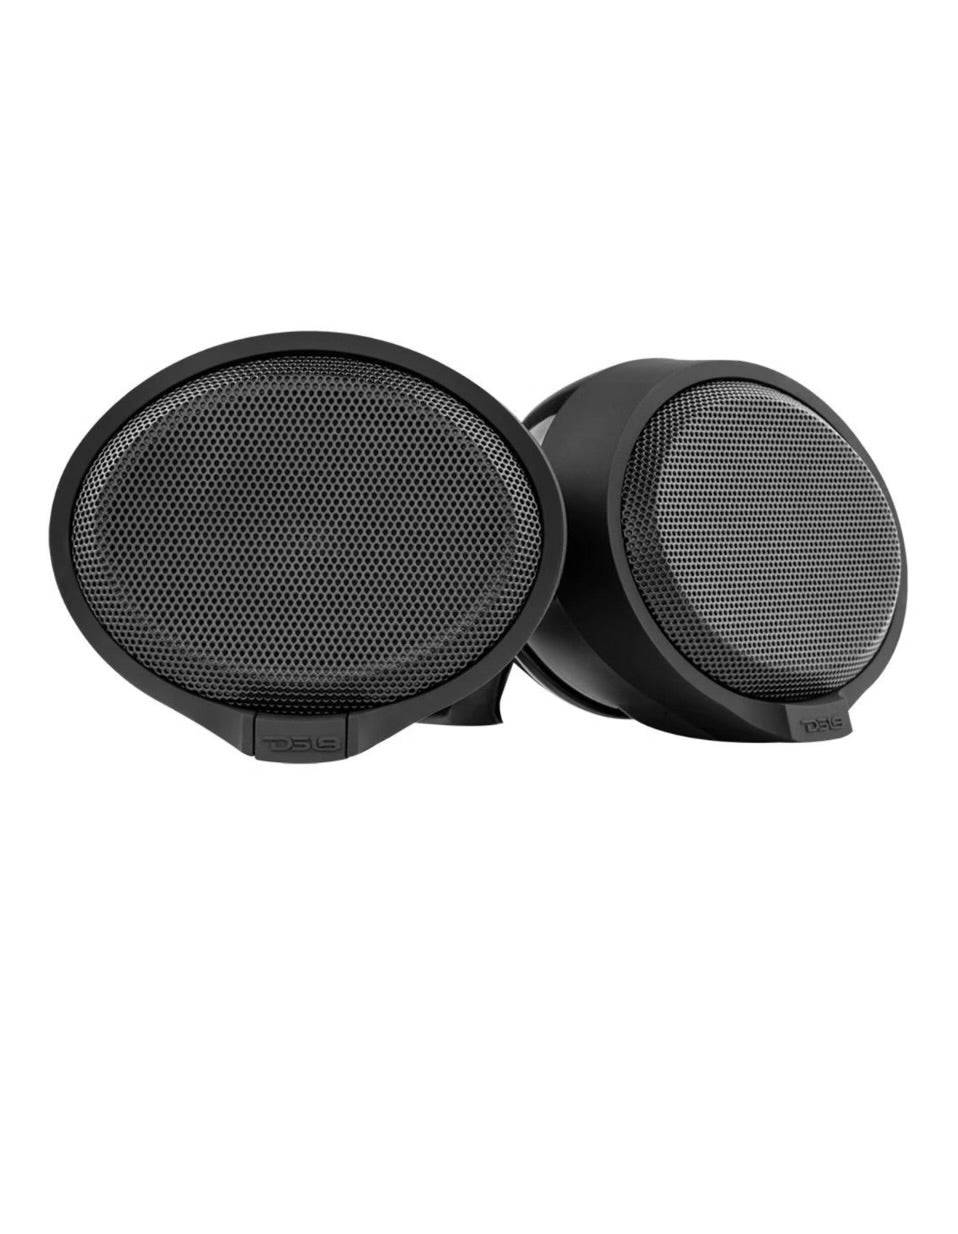 Amplified Handlebar Mount Speakers - Backyard Air Suspension & Innovations, LLC.